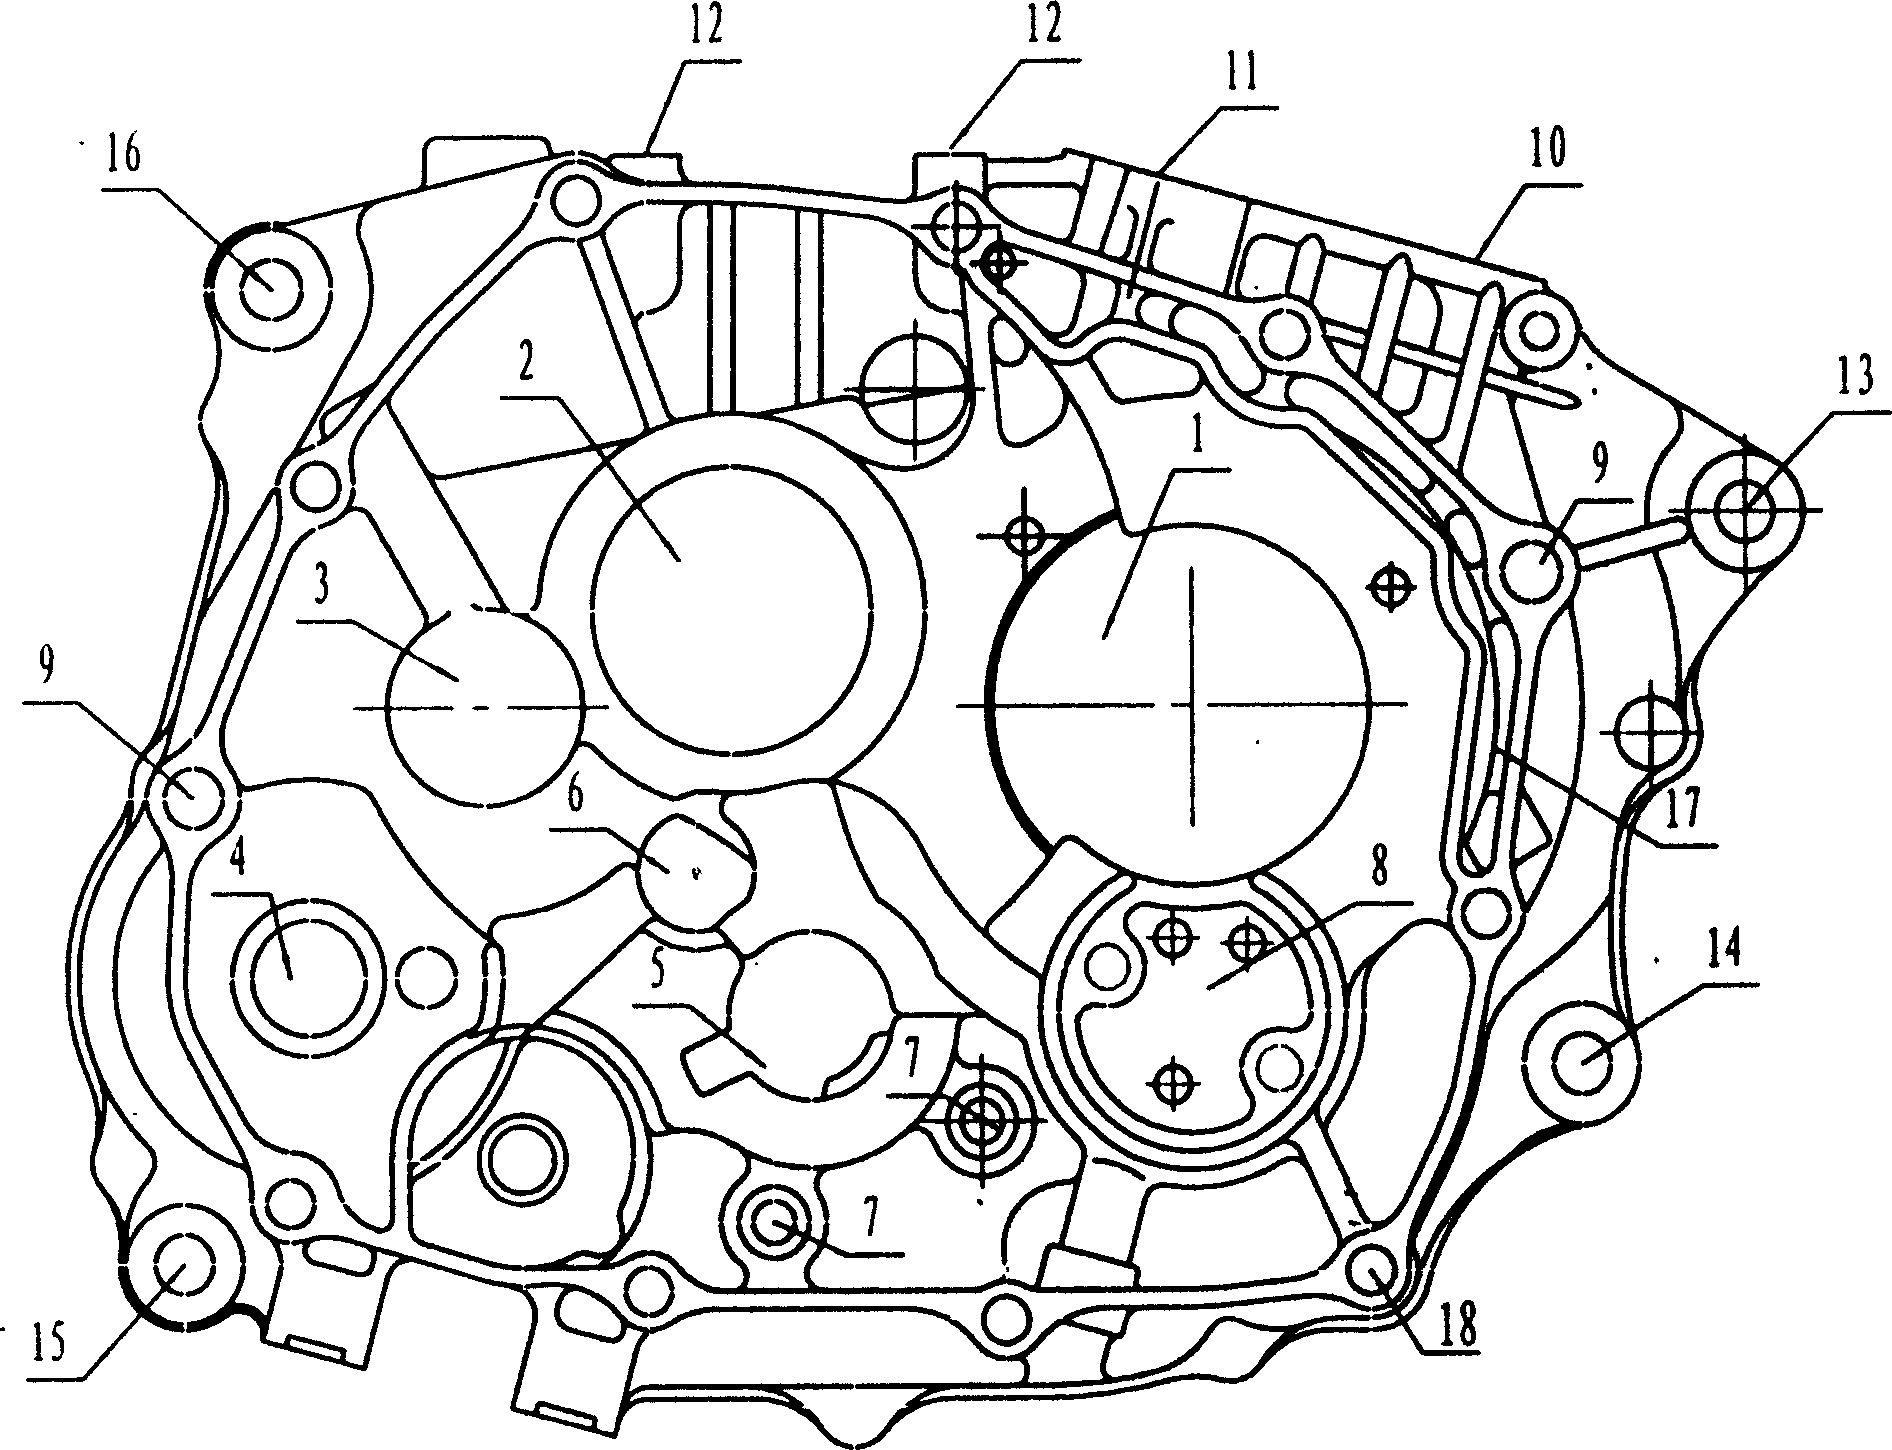 Reducing vibration type engine crankcase of motorcycle